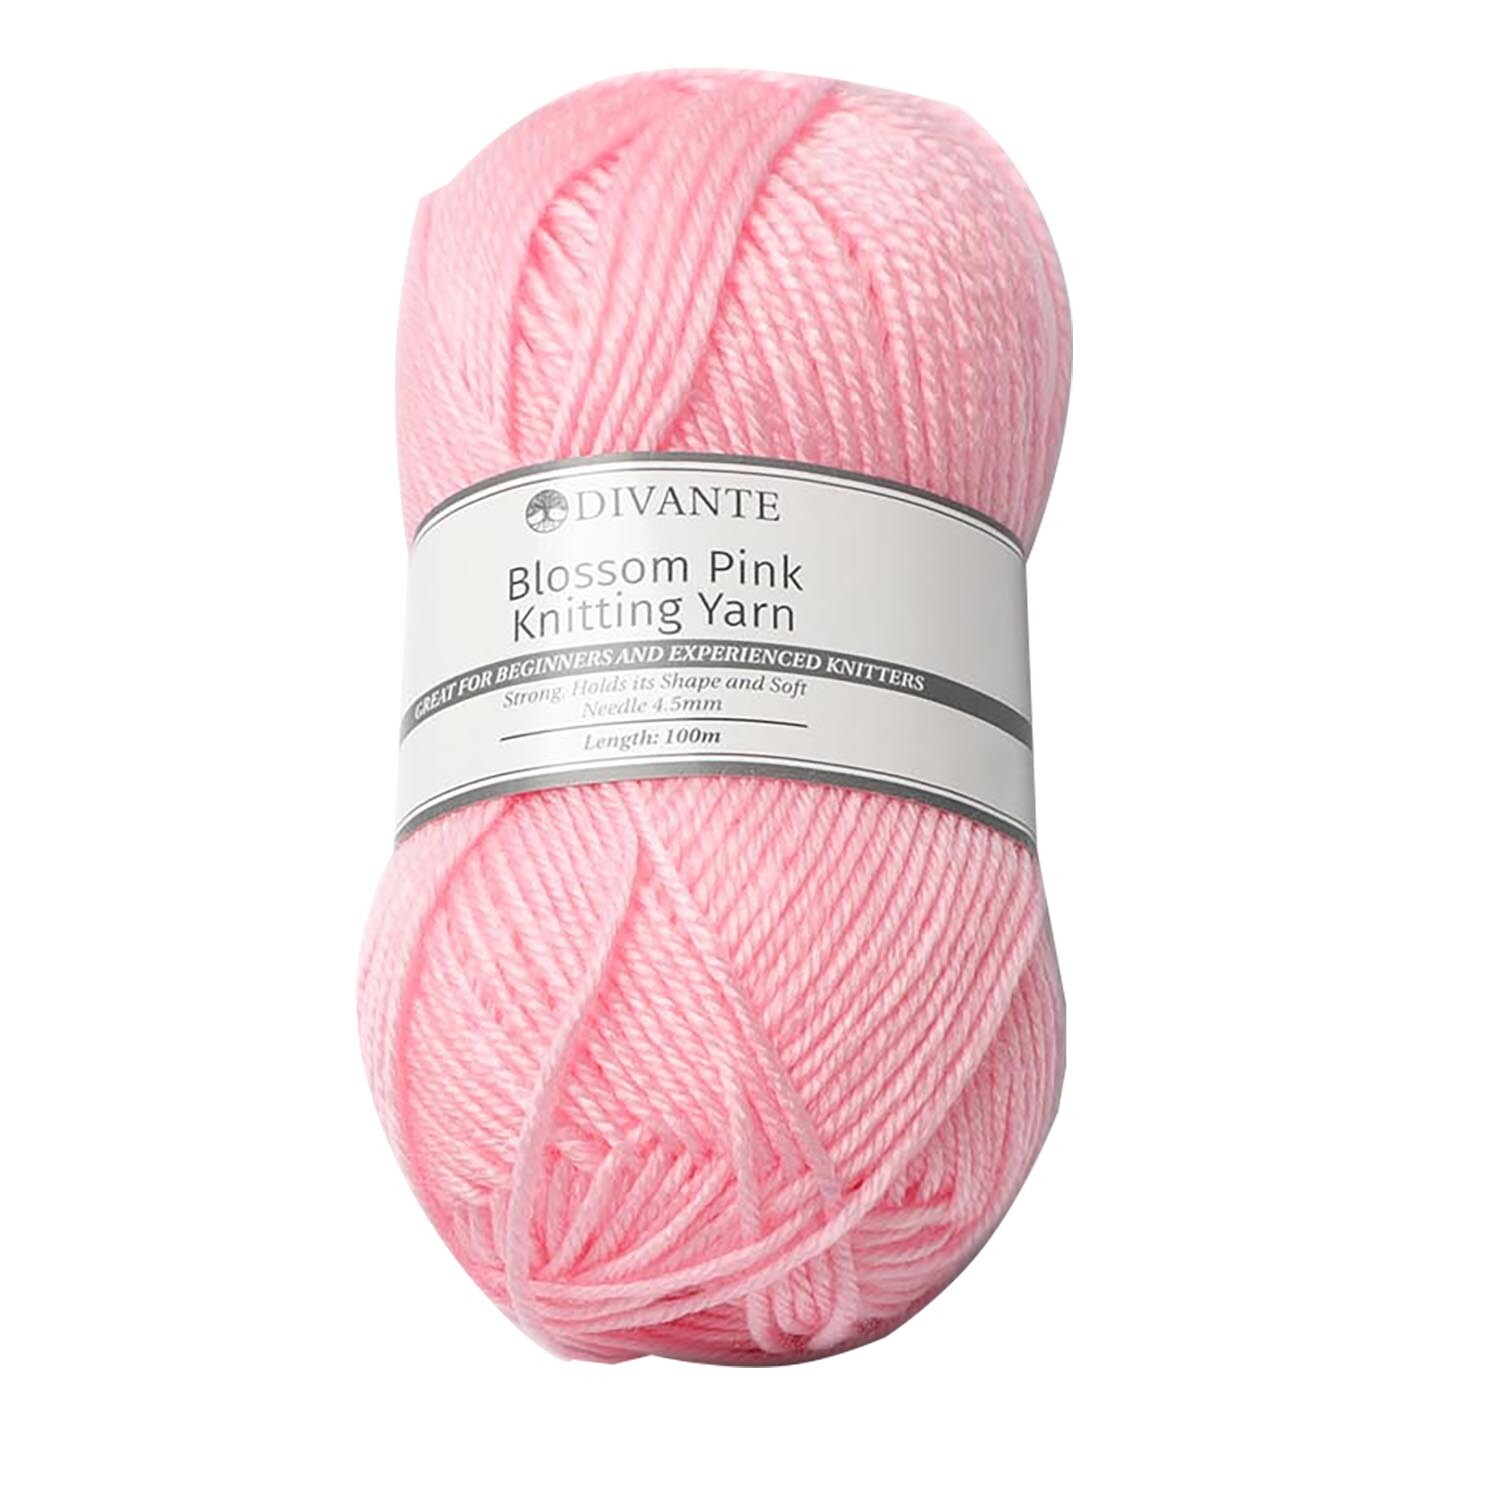 Divante Blossom Pink Knitting Yarn 50g Image